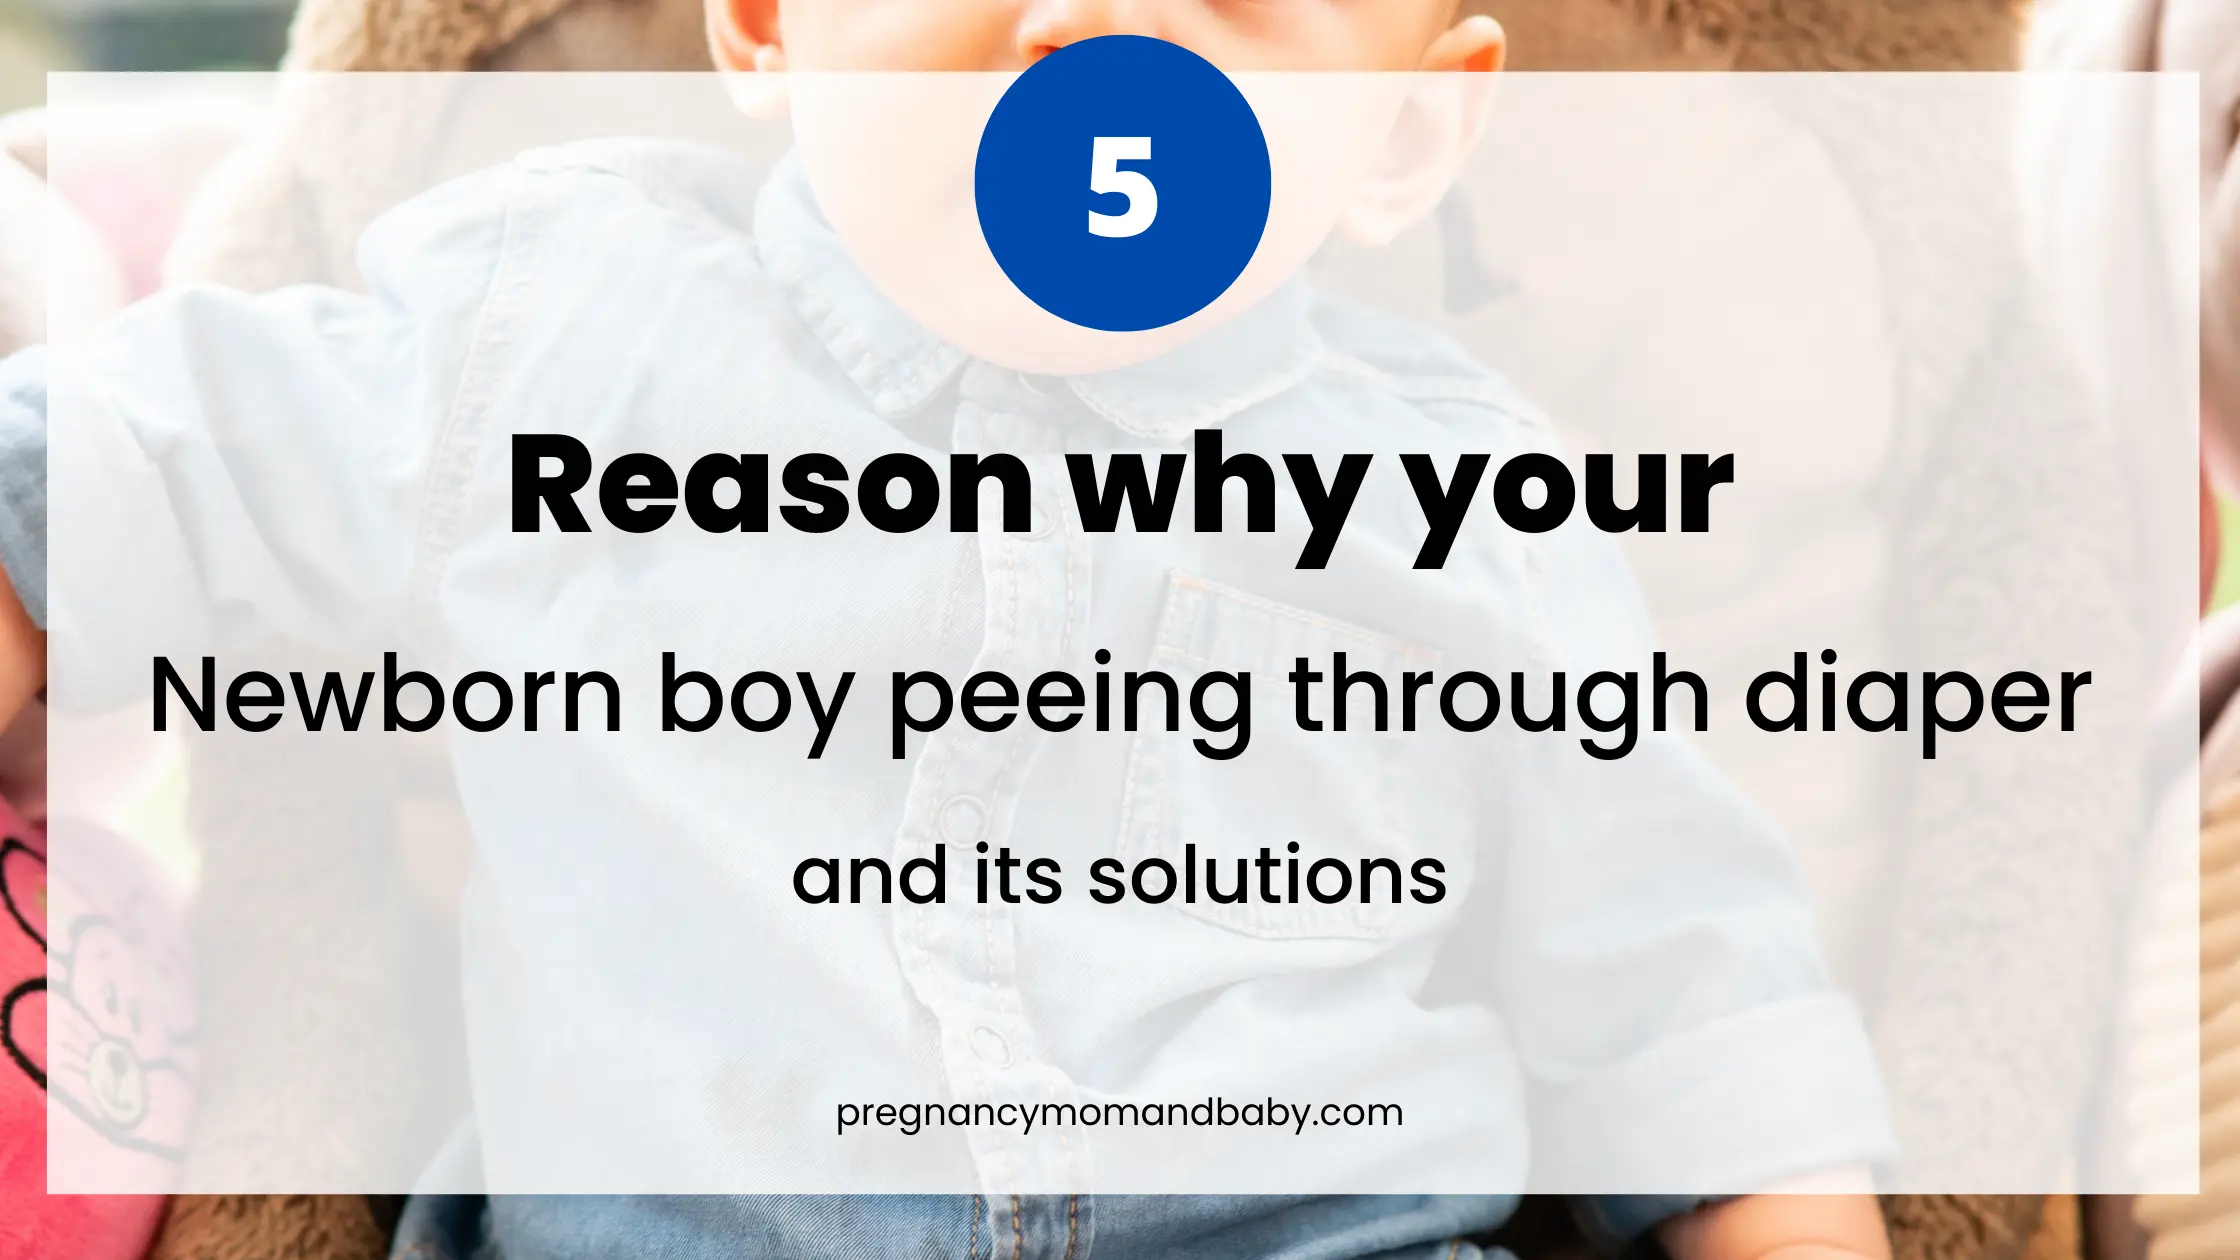 Newborn boy peeing through diaper